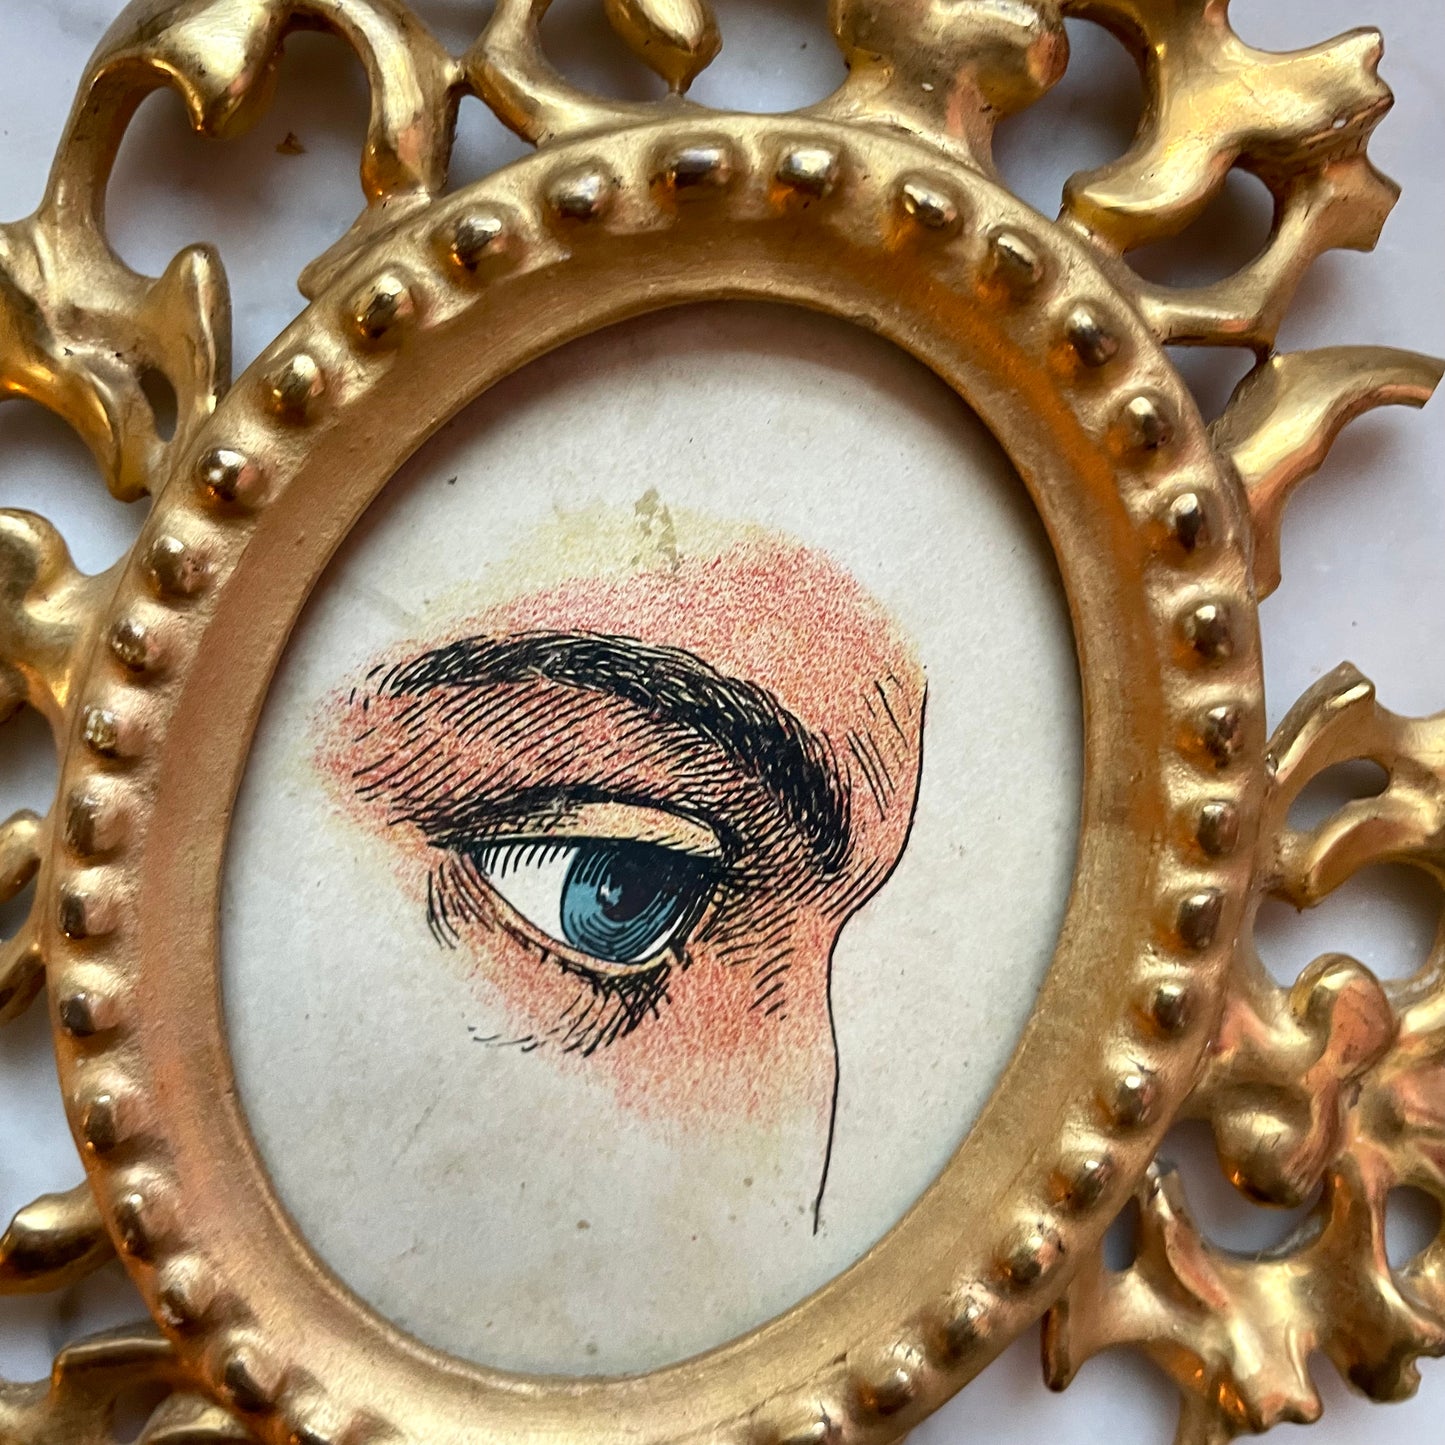 Victorian Assemblage | “Lover’s Eye”